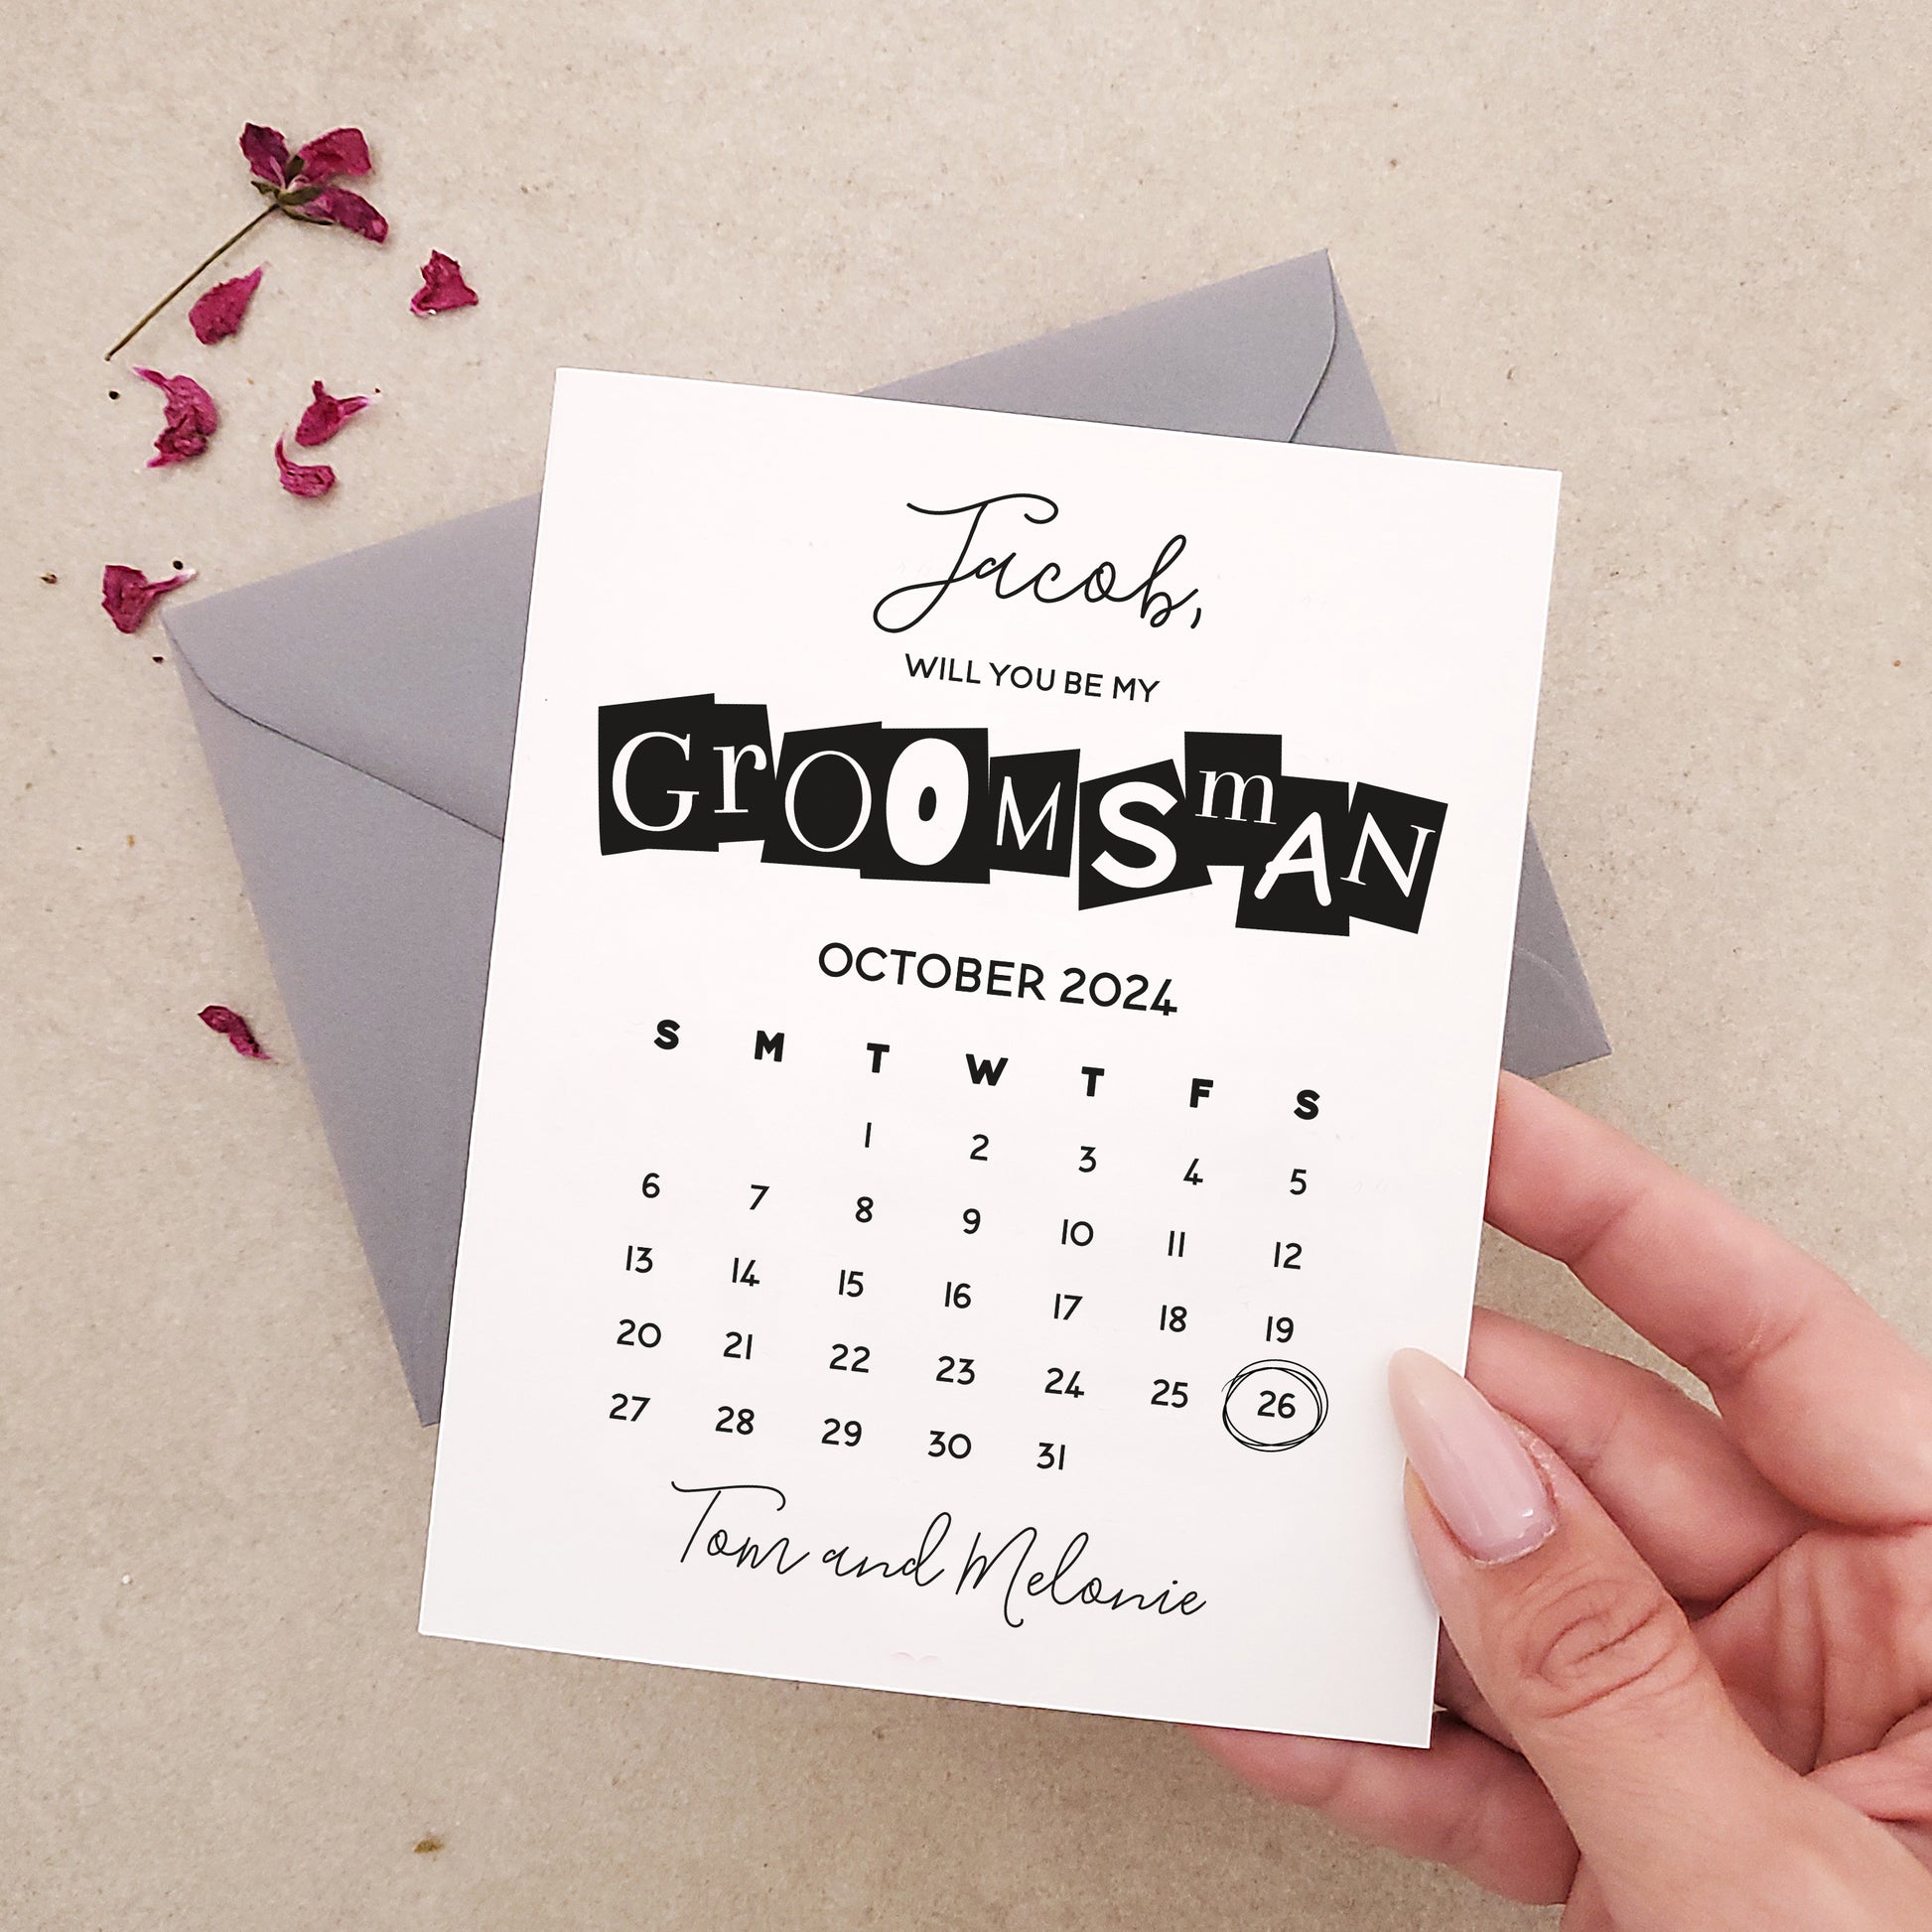 will you be my groomsman proposal calendar card - XOXOKristen